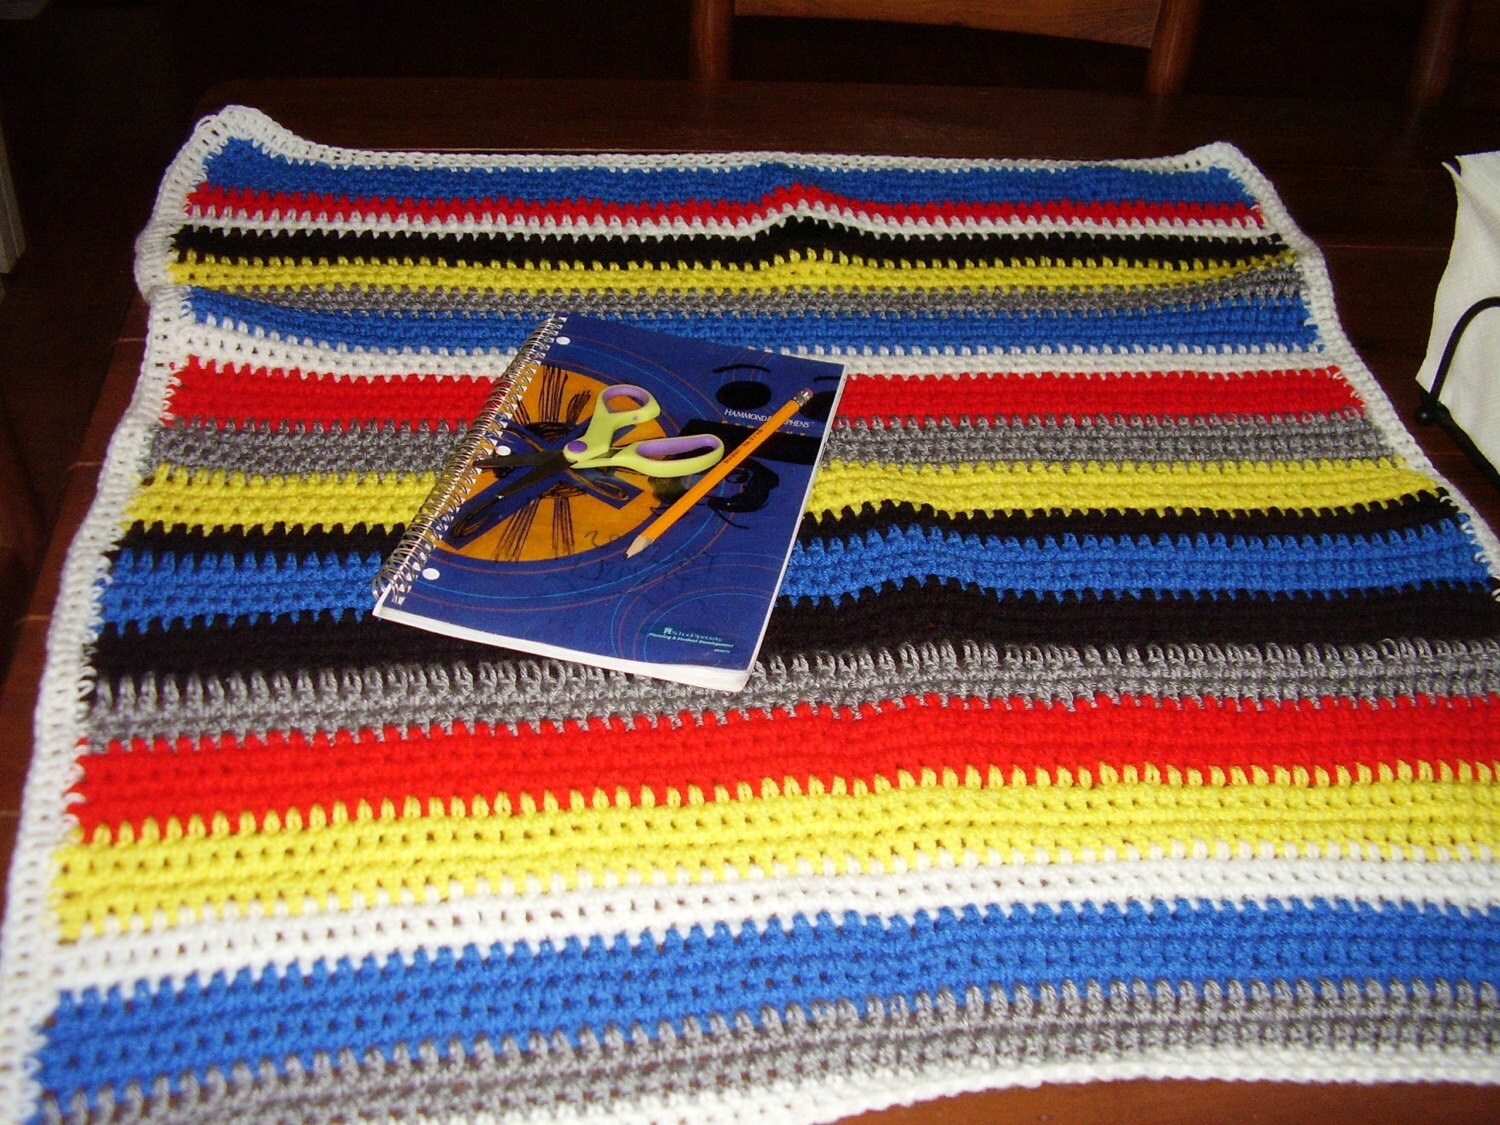 Crochet baby blanket in primary colors